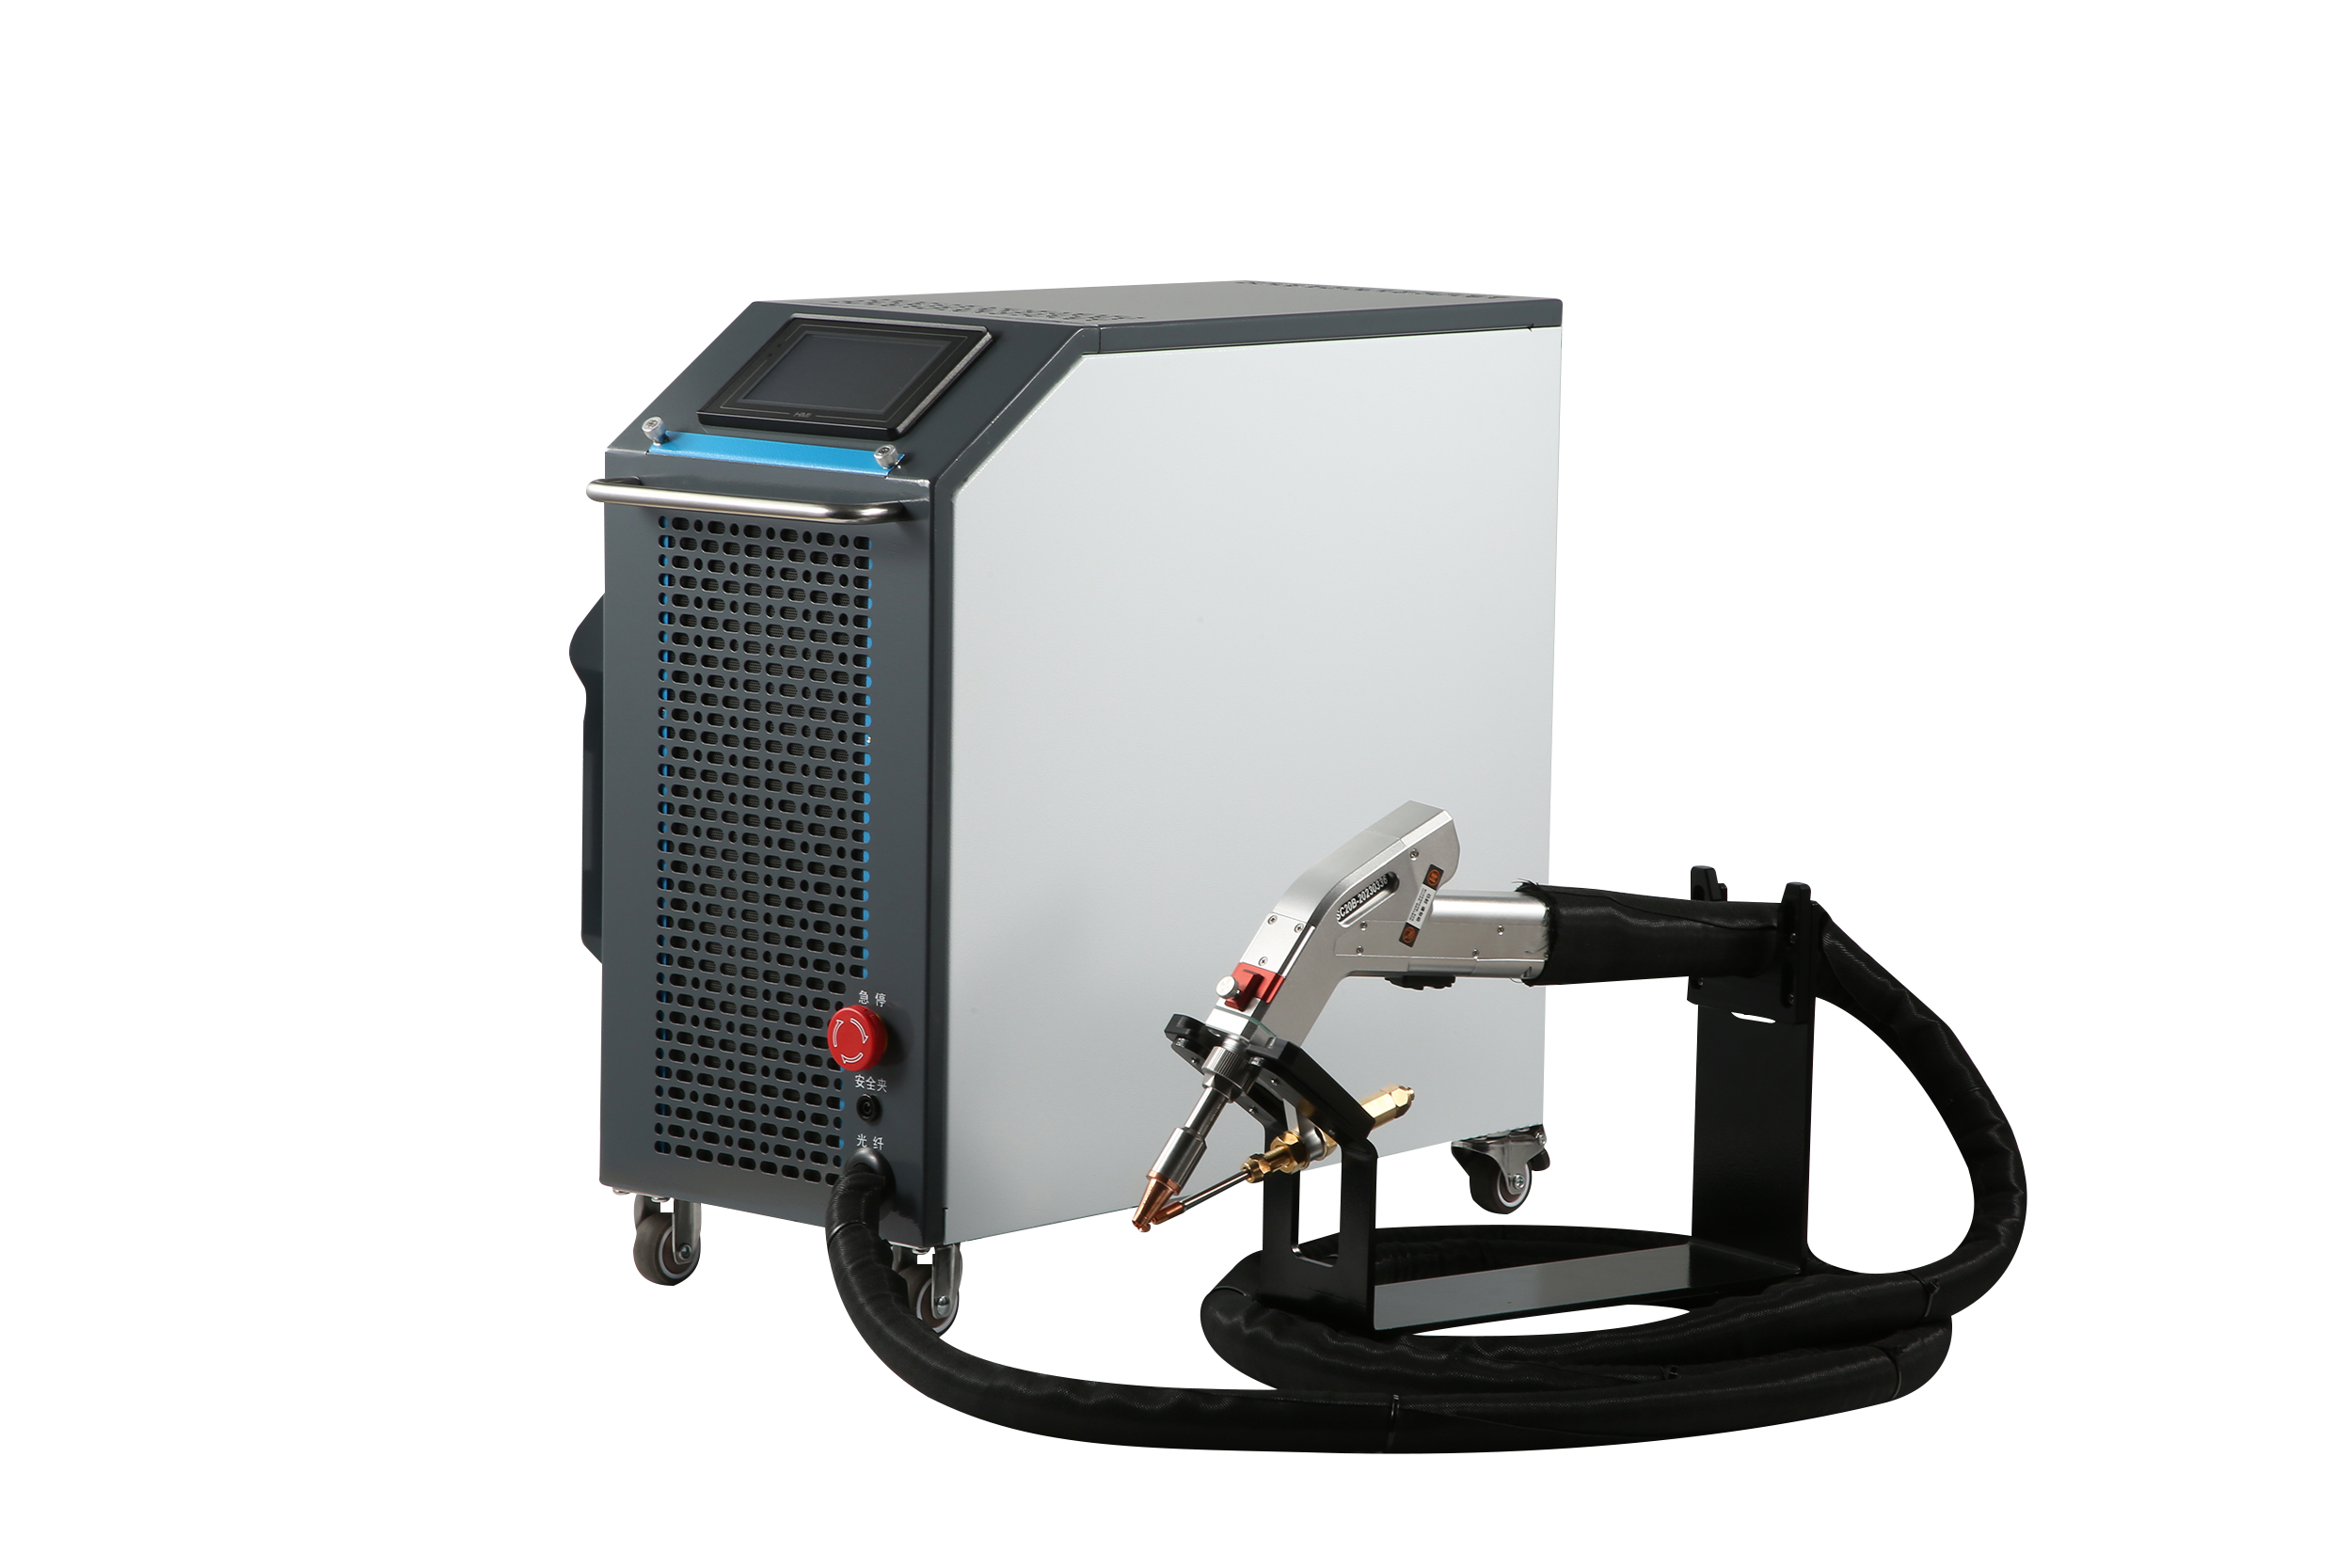 ComWelder B1 800W Air cooling handheld Laser Welding Machine